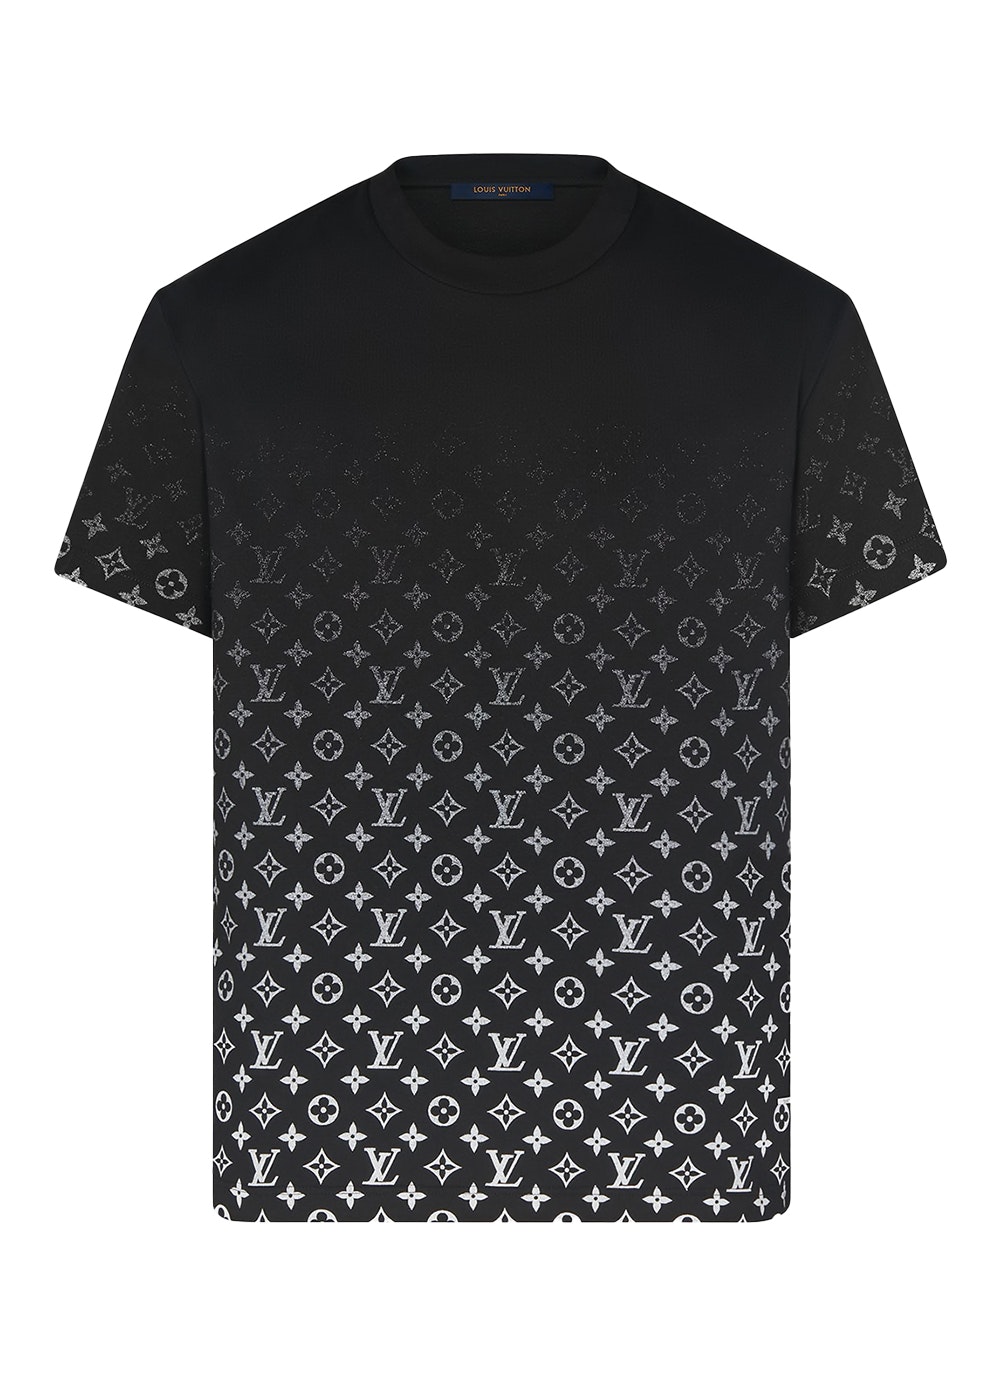 Louis Vuitton LV Frequency Graphic Black T Shirt  Crepslocker